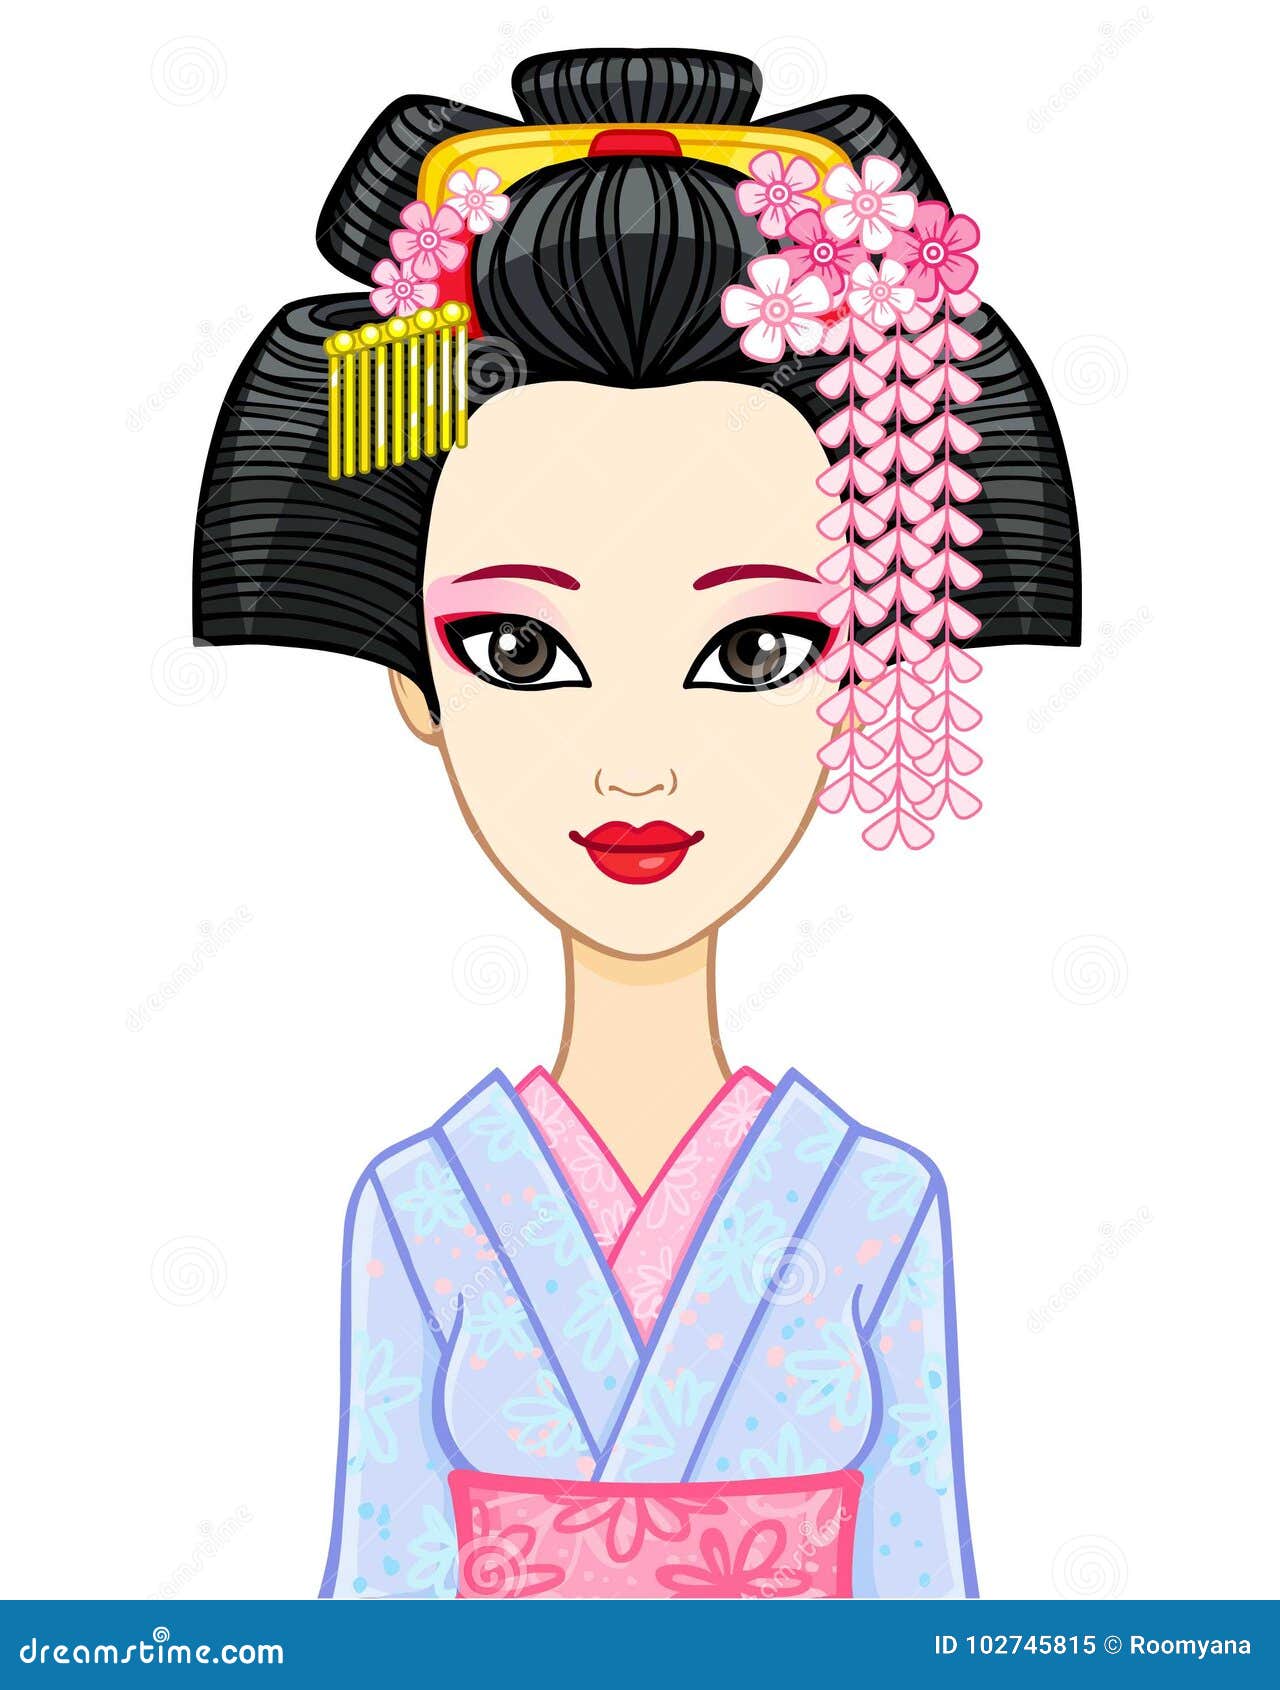 Japanese Hairstyle Images - Free Download on Freepik